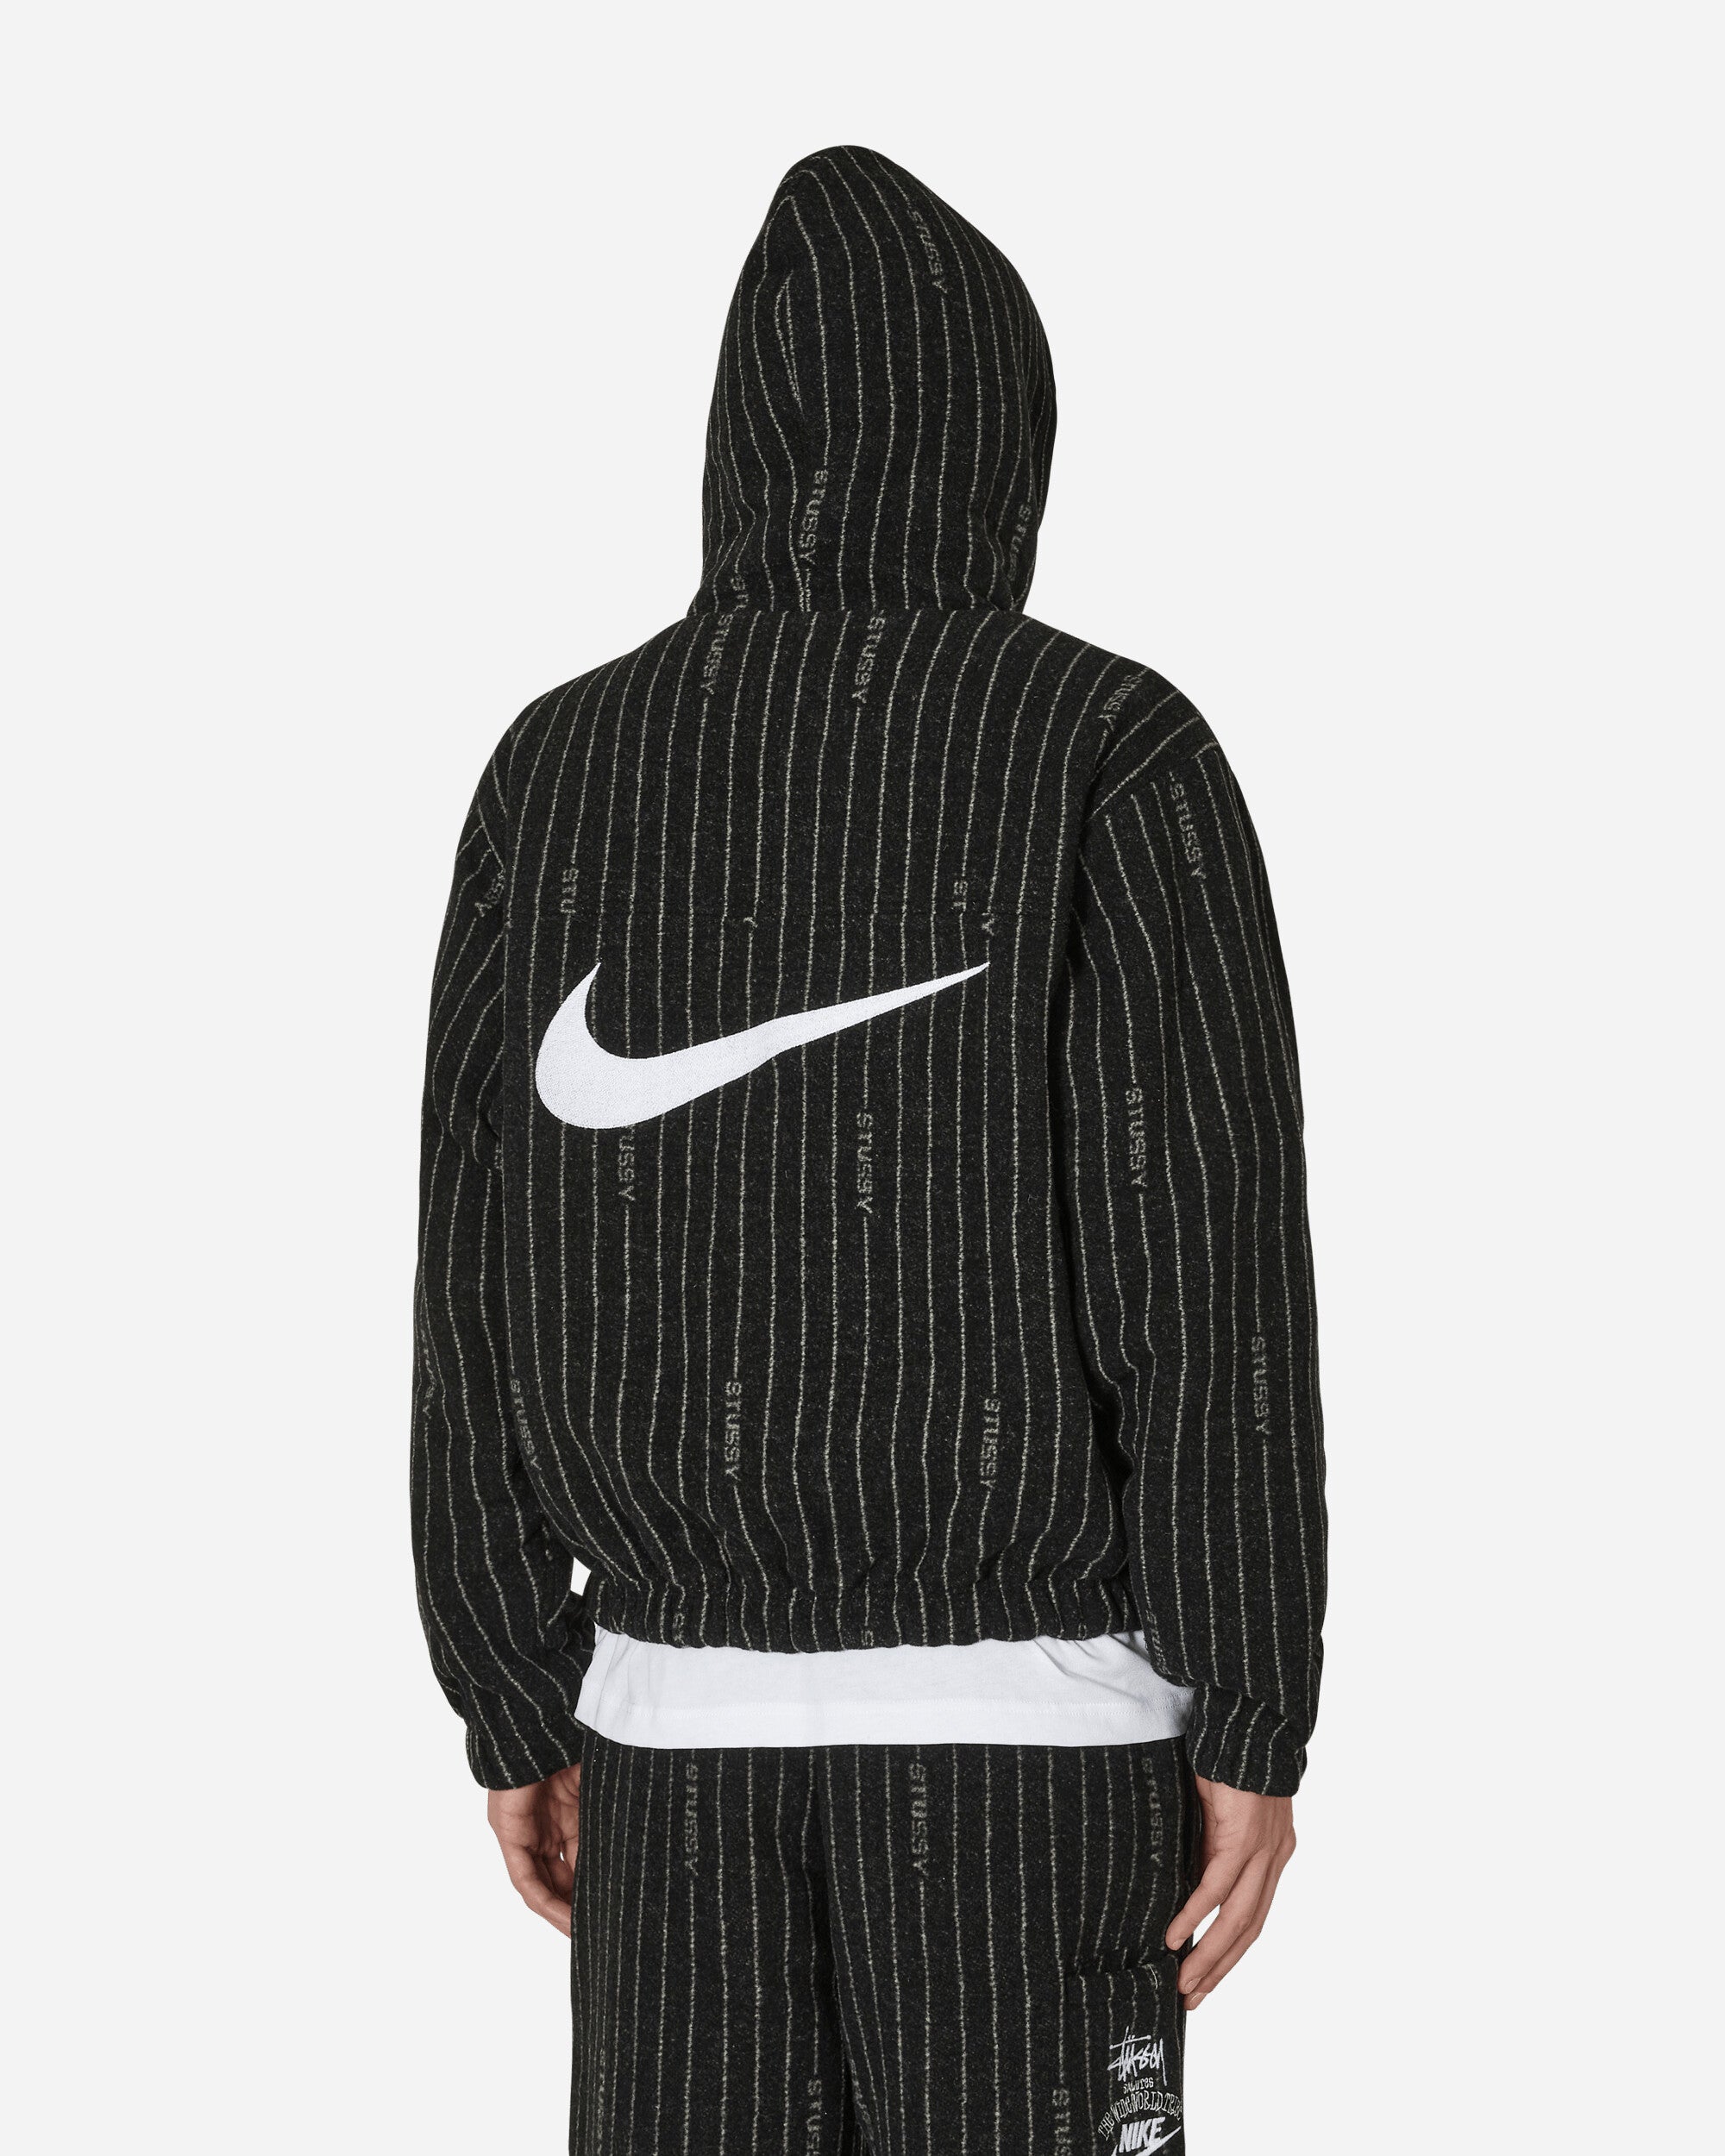 Stussy x Nike Striped Wool Jacket 